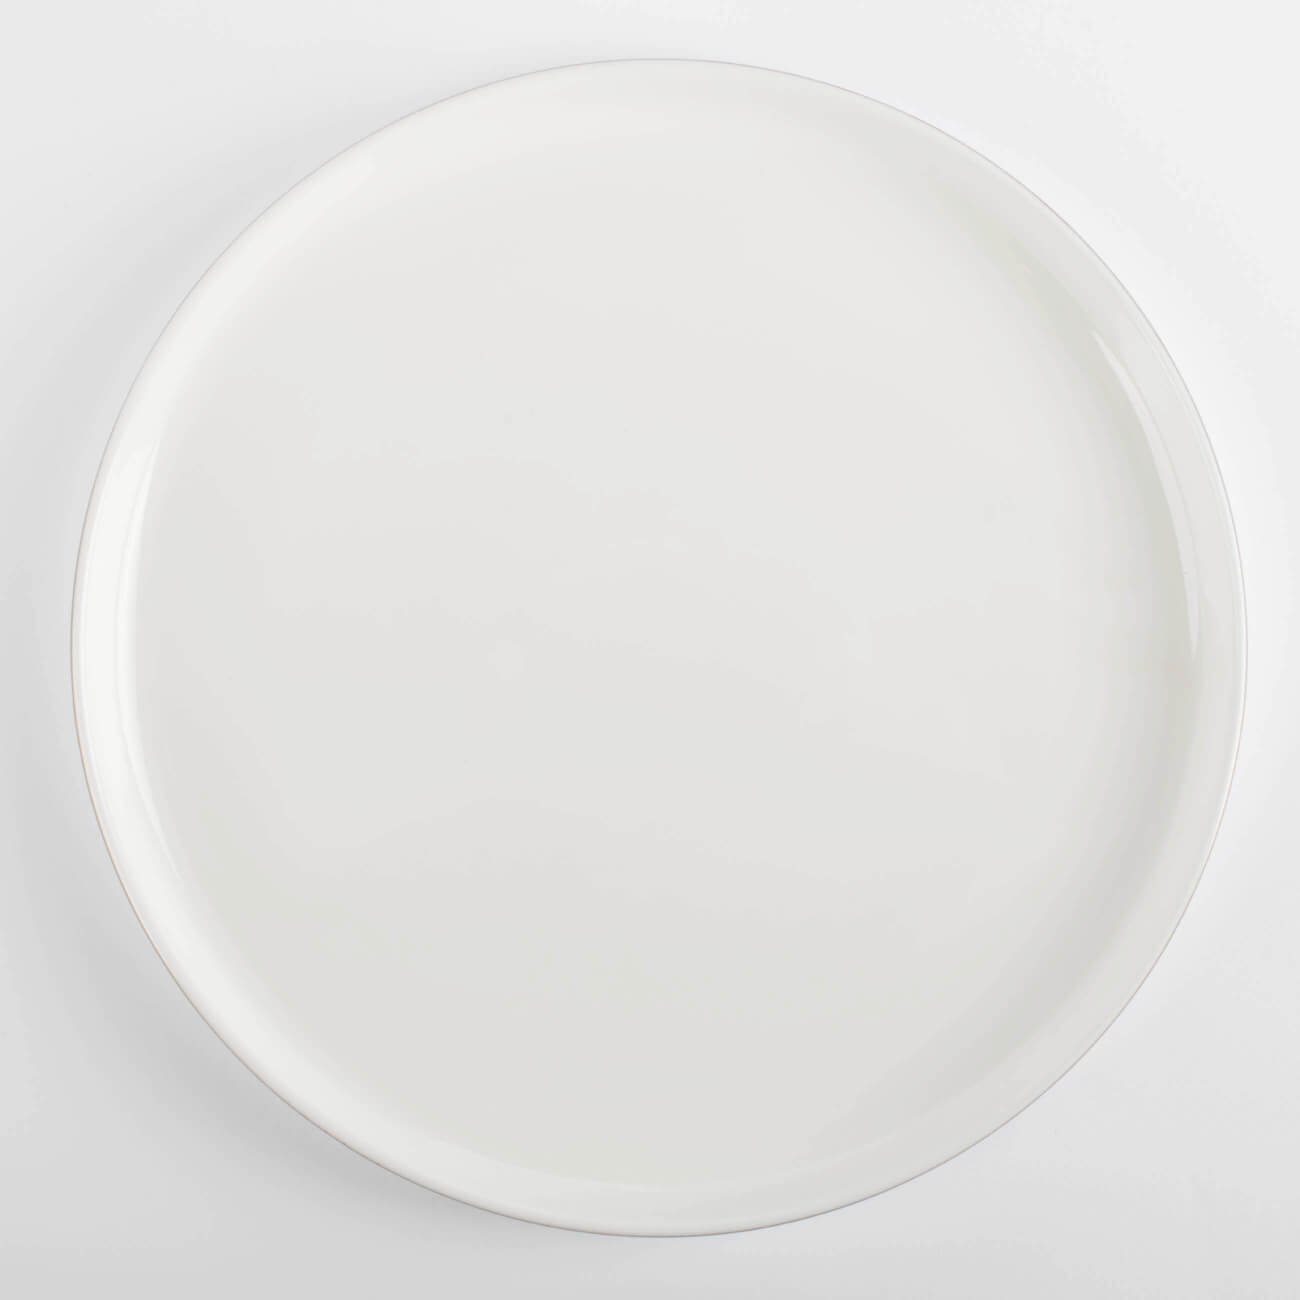 Тарелка обеденная, 26 см, фарфор F, белая, Ideal gold тарелка обеденная bronco meadow 29x23 см мятный арт 474 116